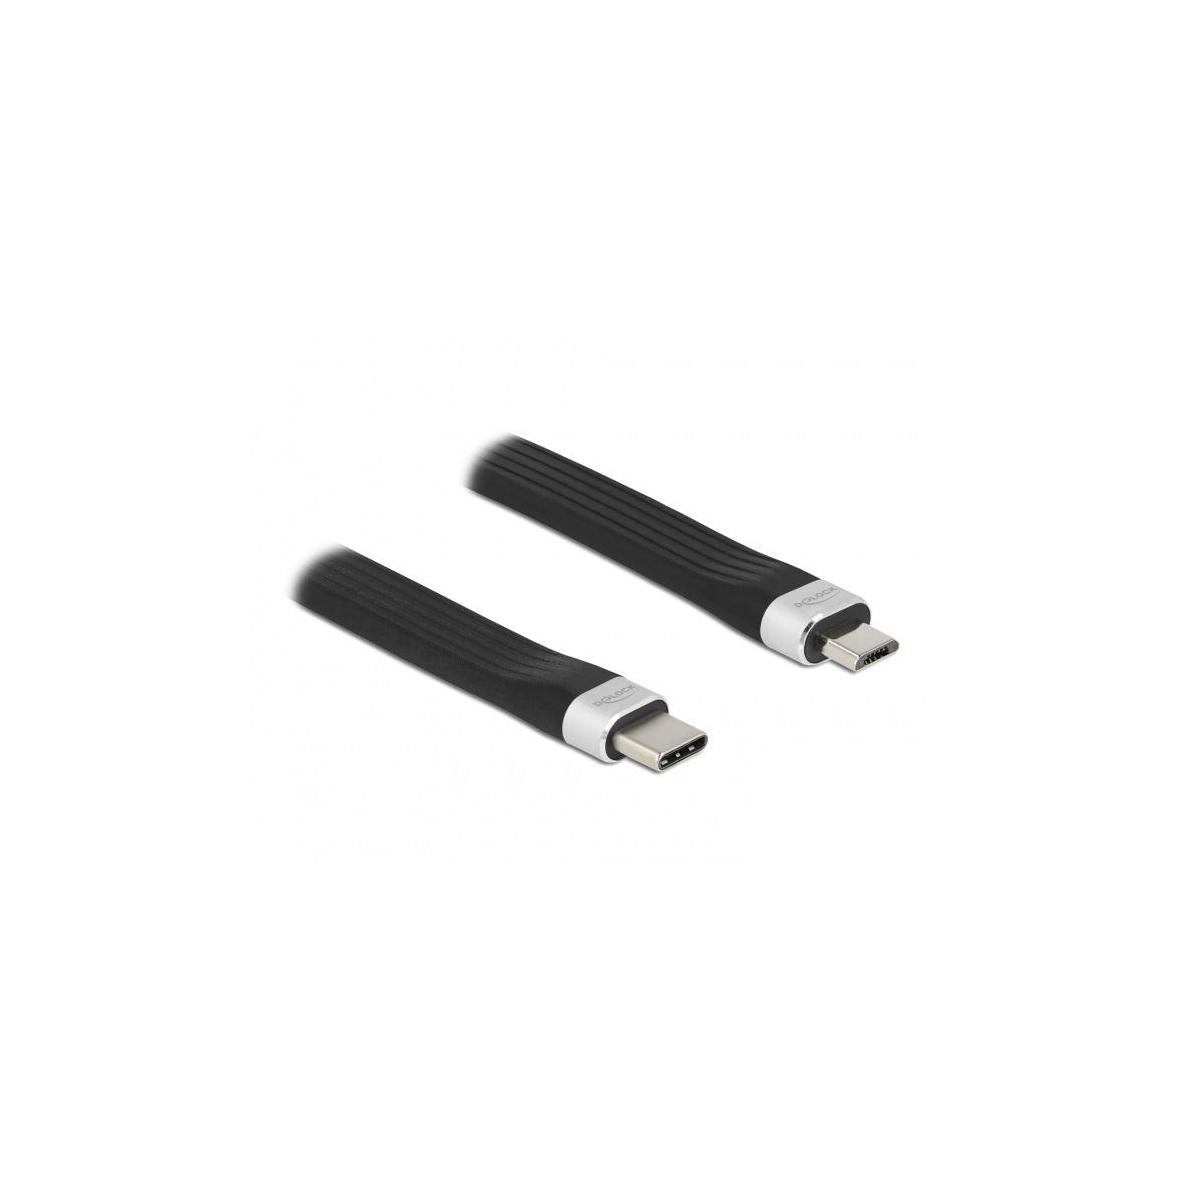 USB DELOCK Kabel, Schwarz 86793